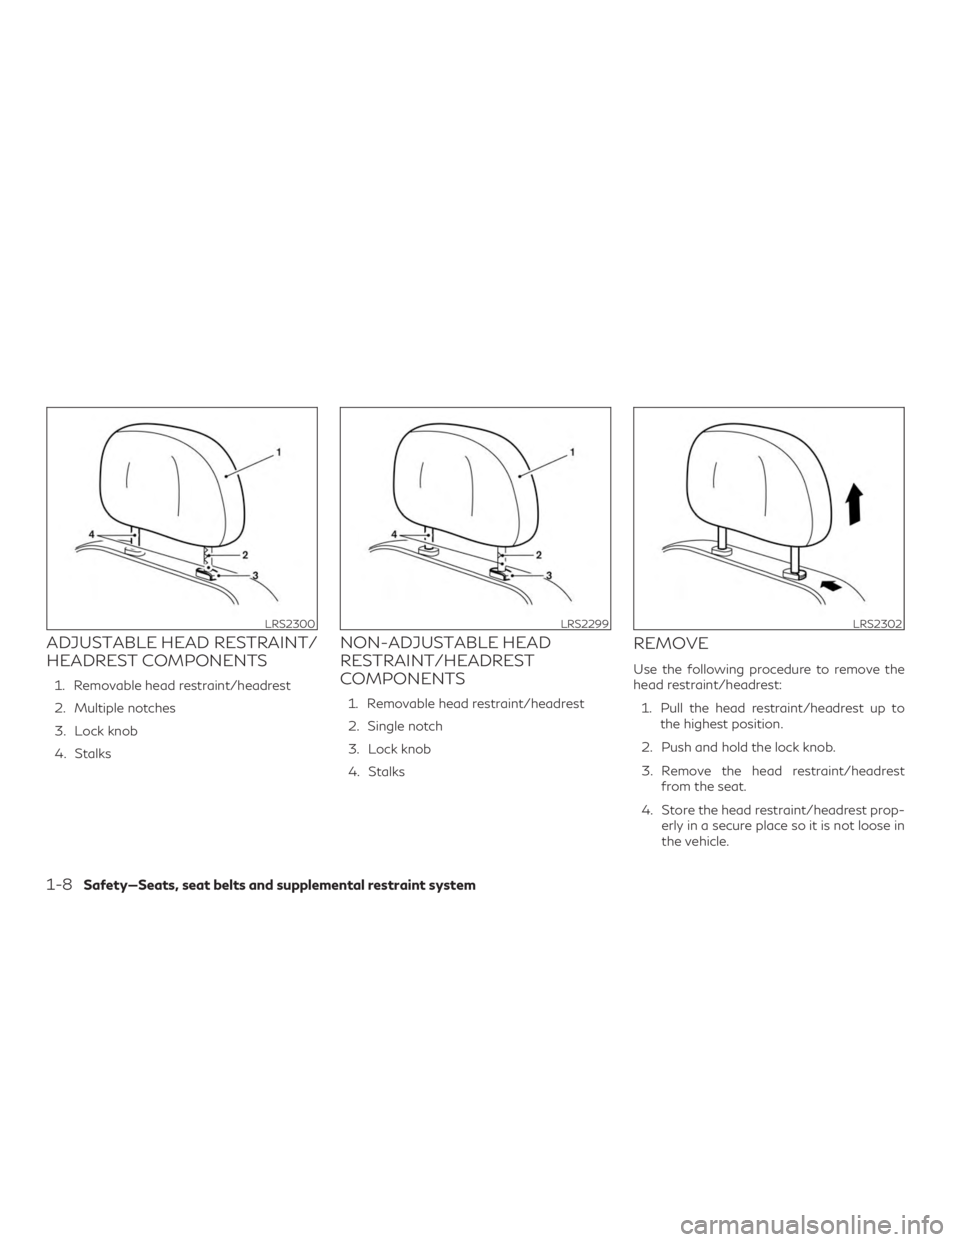 INFINITI QX50 2020  Owners Manual ADJUSTABLE HEAD RESTRAINT/
HEADREST COMPONENTS
1. Removable head restraint/headrest
2. Multiple notches
3. Lock knob
4. Stalks
NON-ADJUSTABLE HEAD
RESTRAINT/HEADREST
COMPONENTS
1. Removable head restr